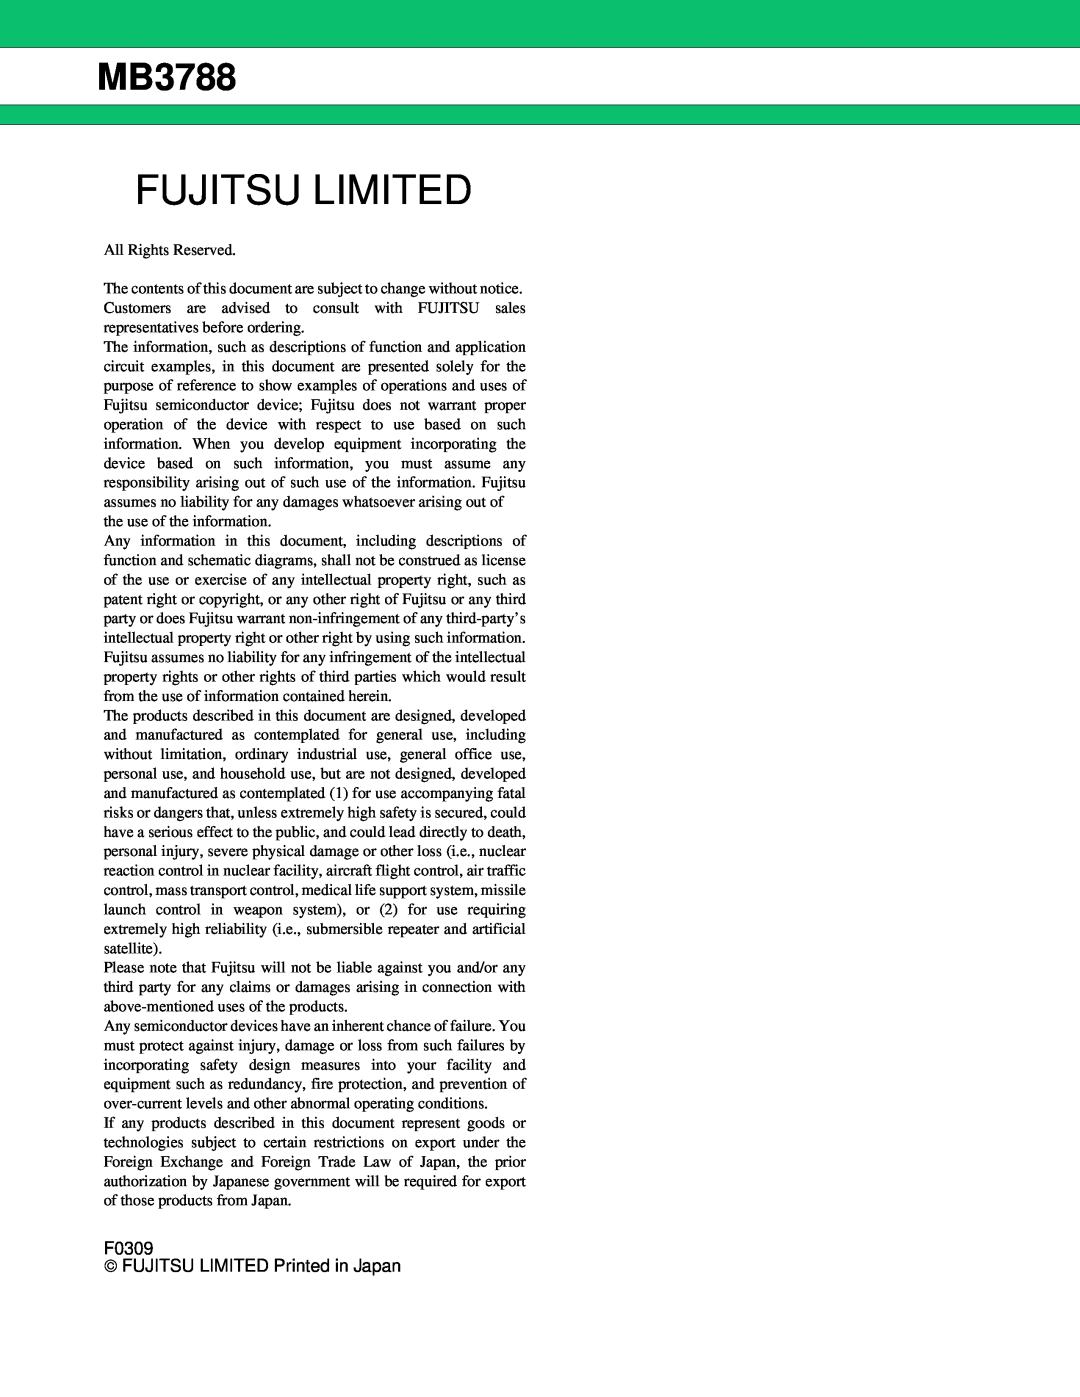 Fujitsu MB3788 manual Fujitsu Limited 